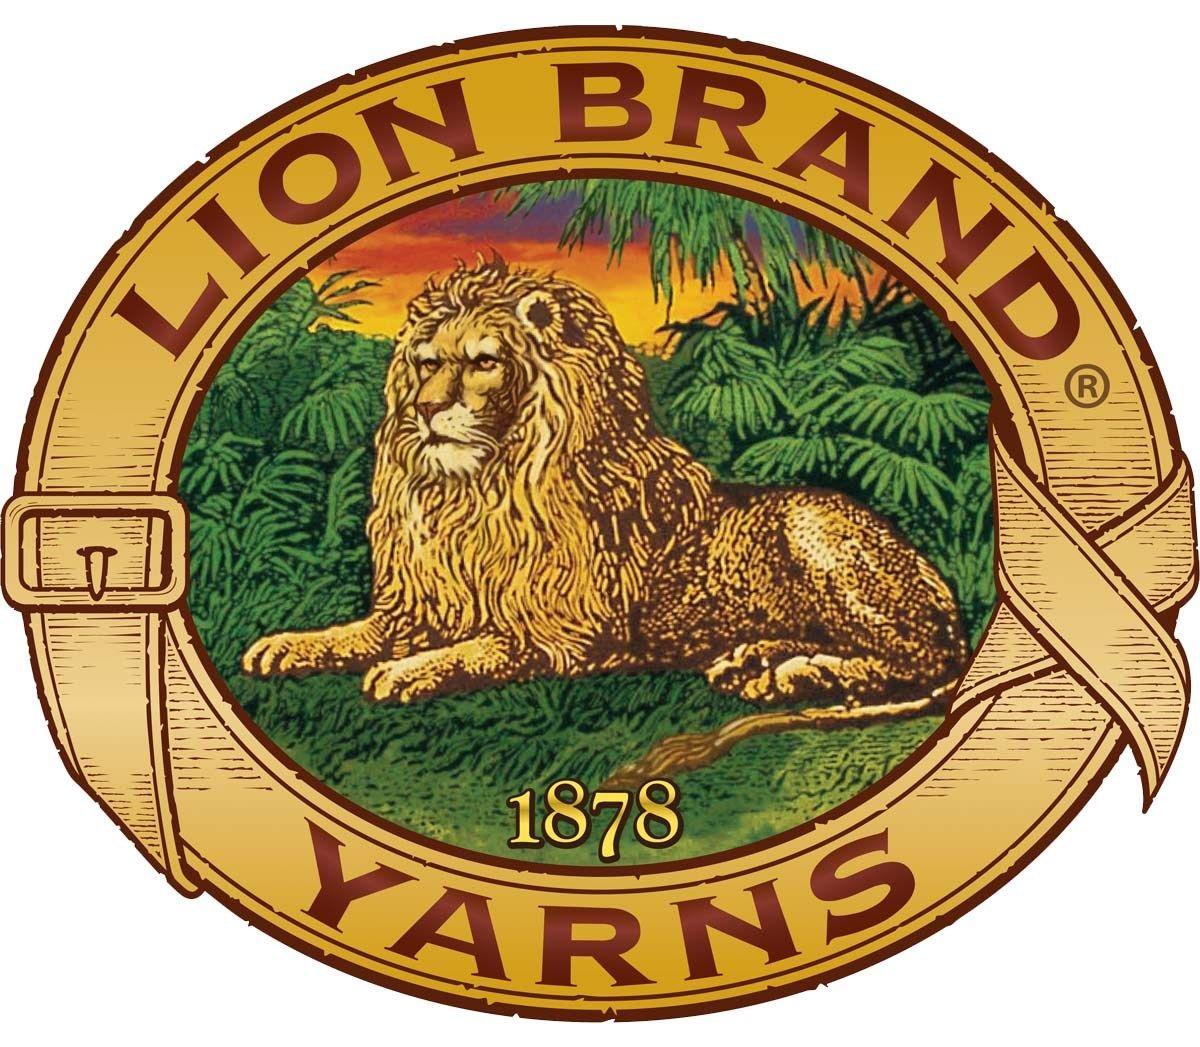 Lion Brand Logo - Lion Brand Logo DAY SWEATER30 DAY SWEATER